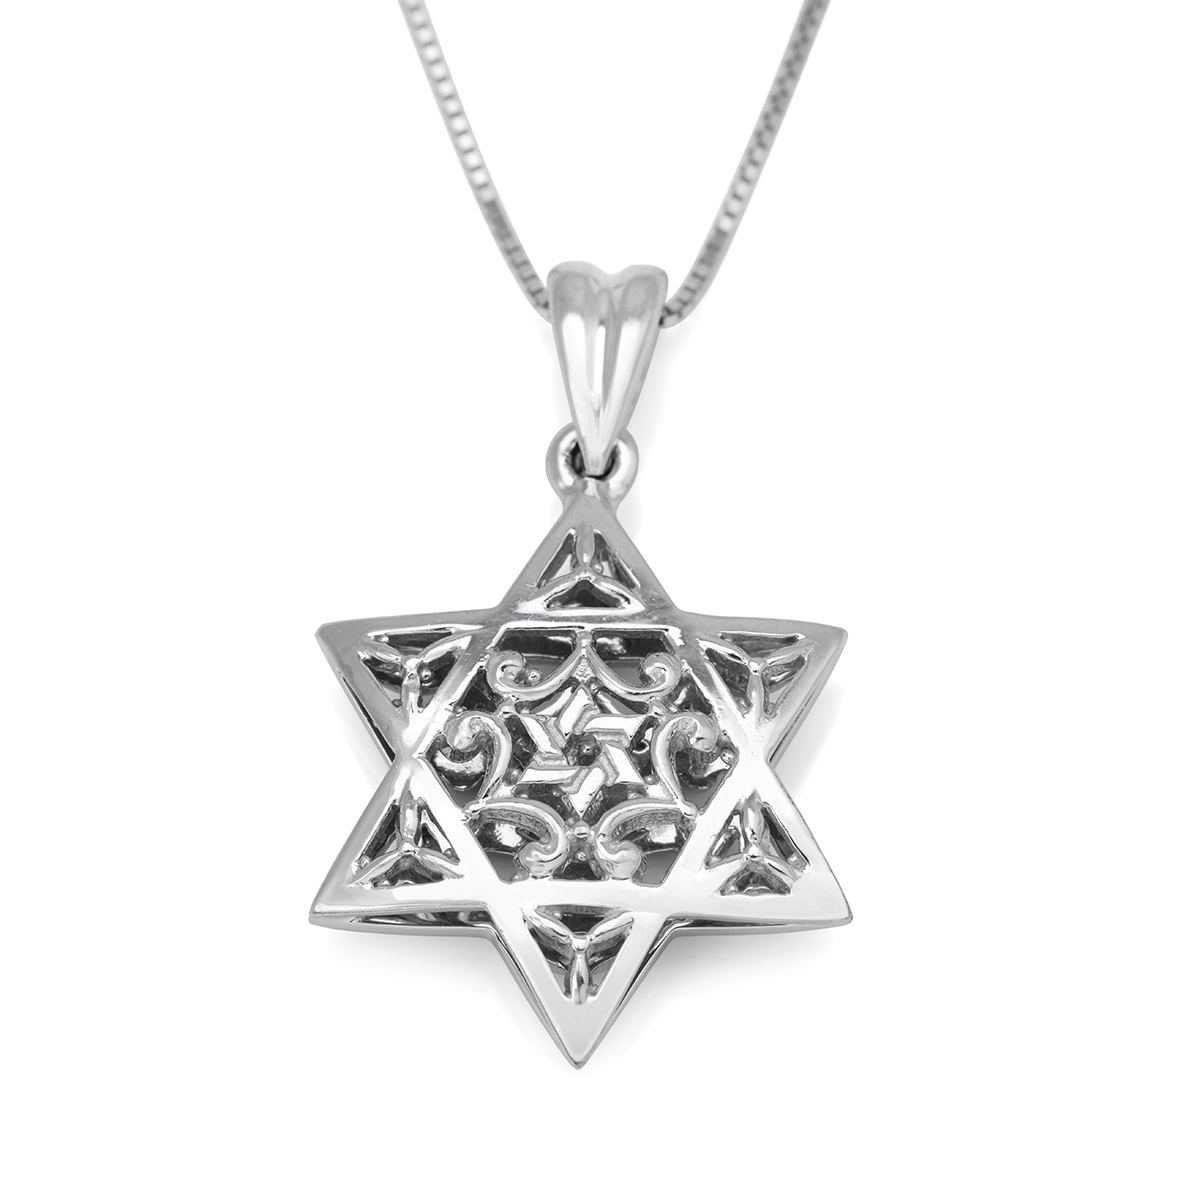 Ornate Domed Star of David 14K White Gold Pendant Necklace - 1